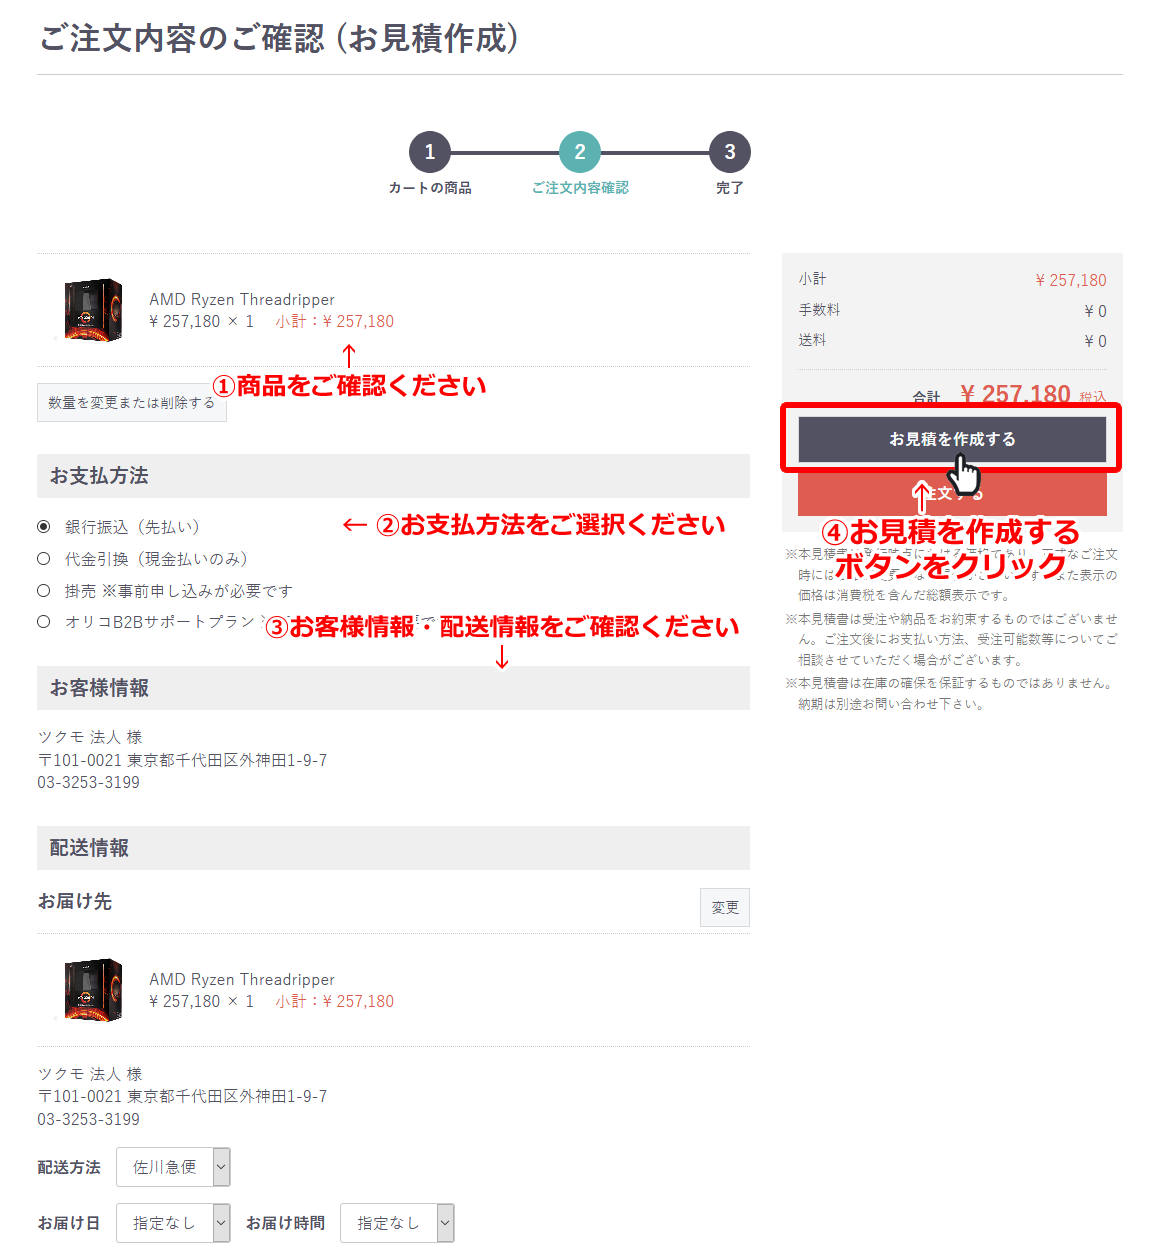 TSUKUMO 法人様専用 オンライン見積サイト / ショップガイド 